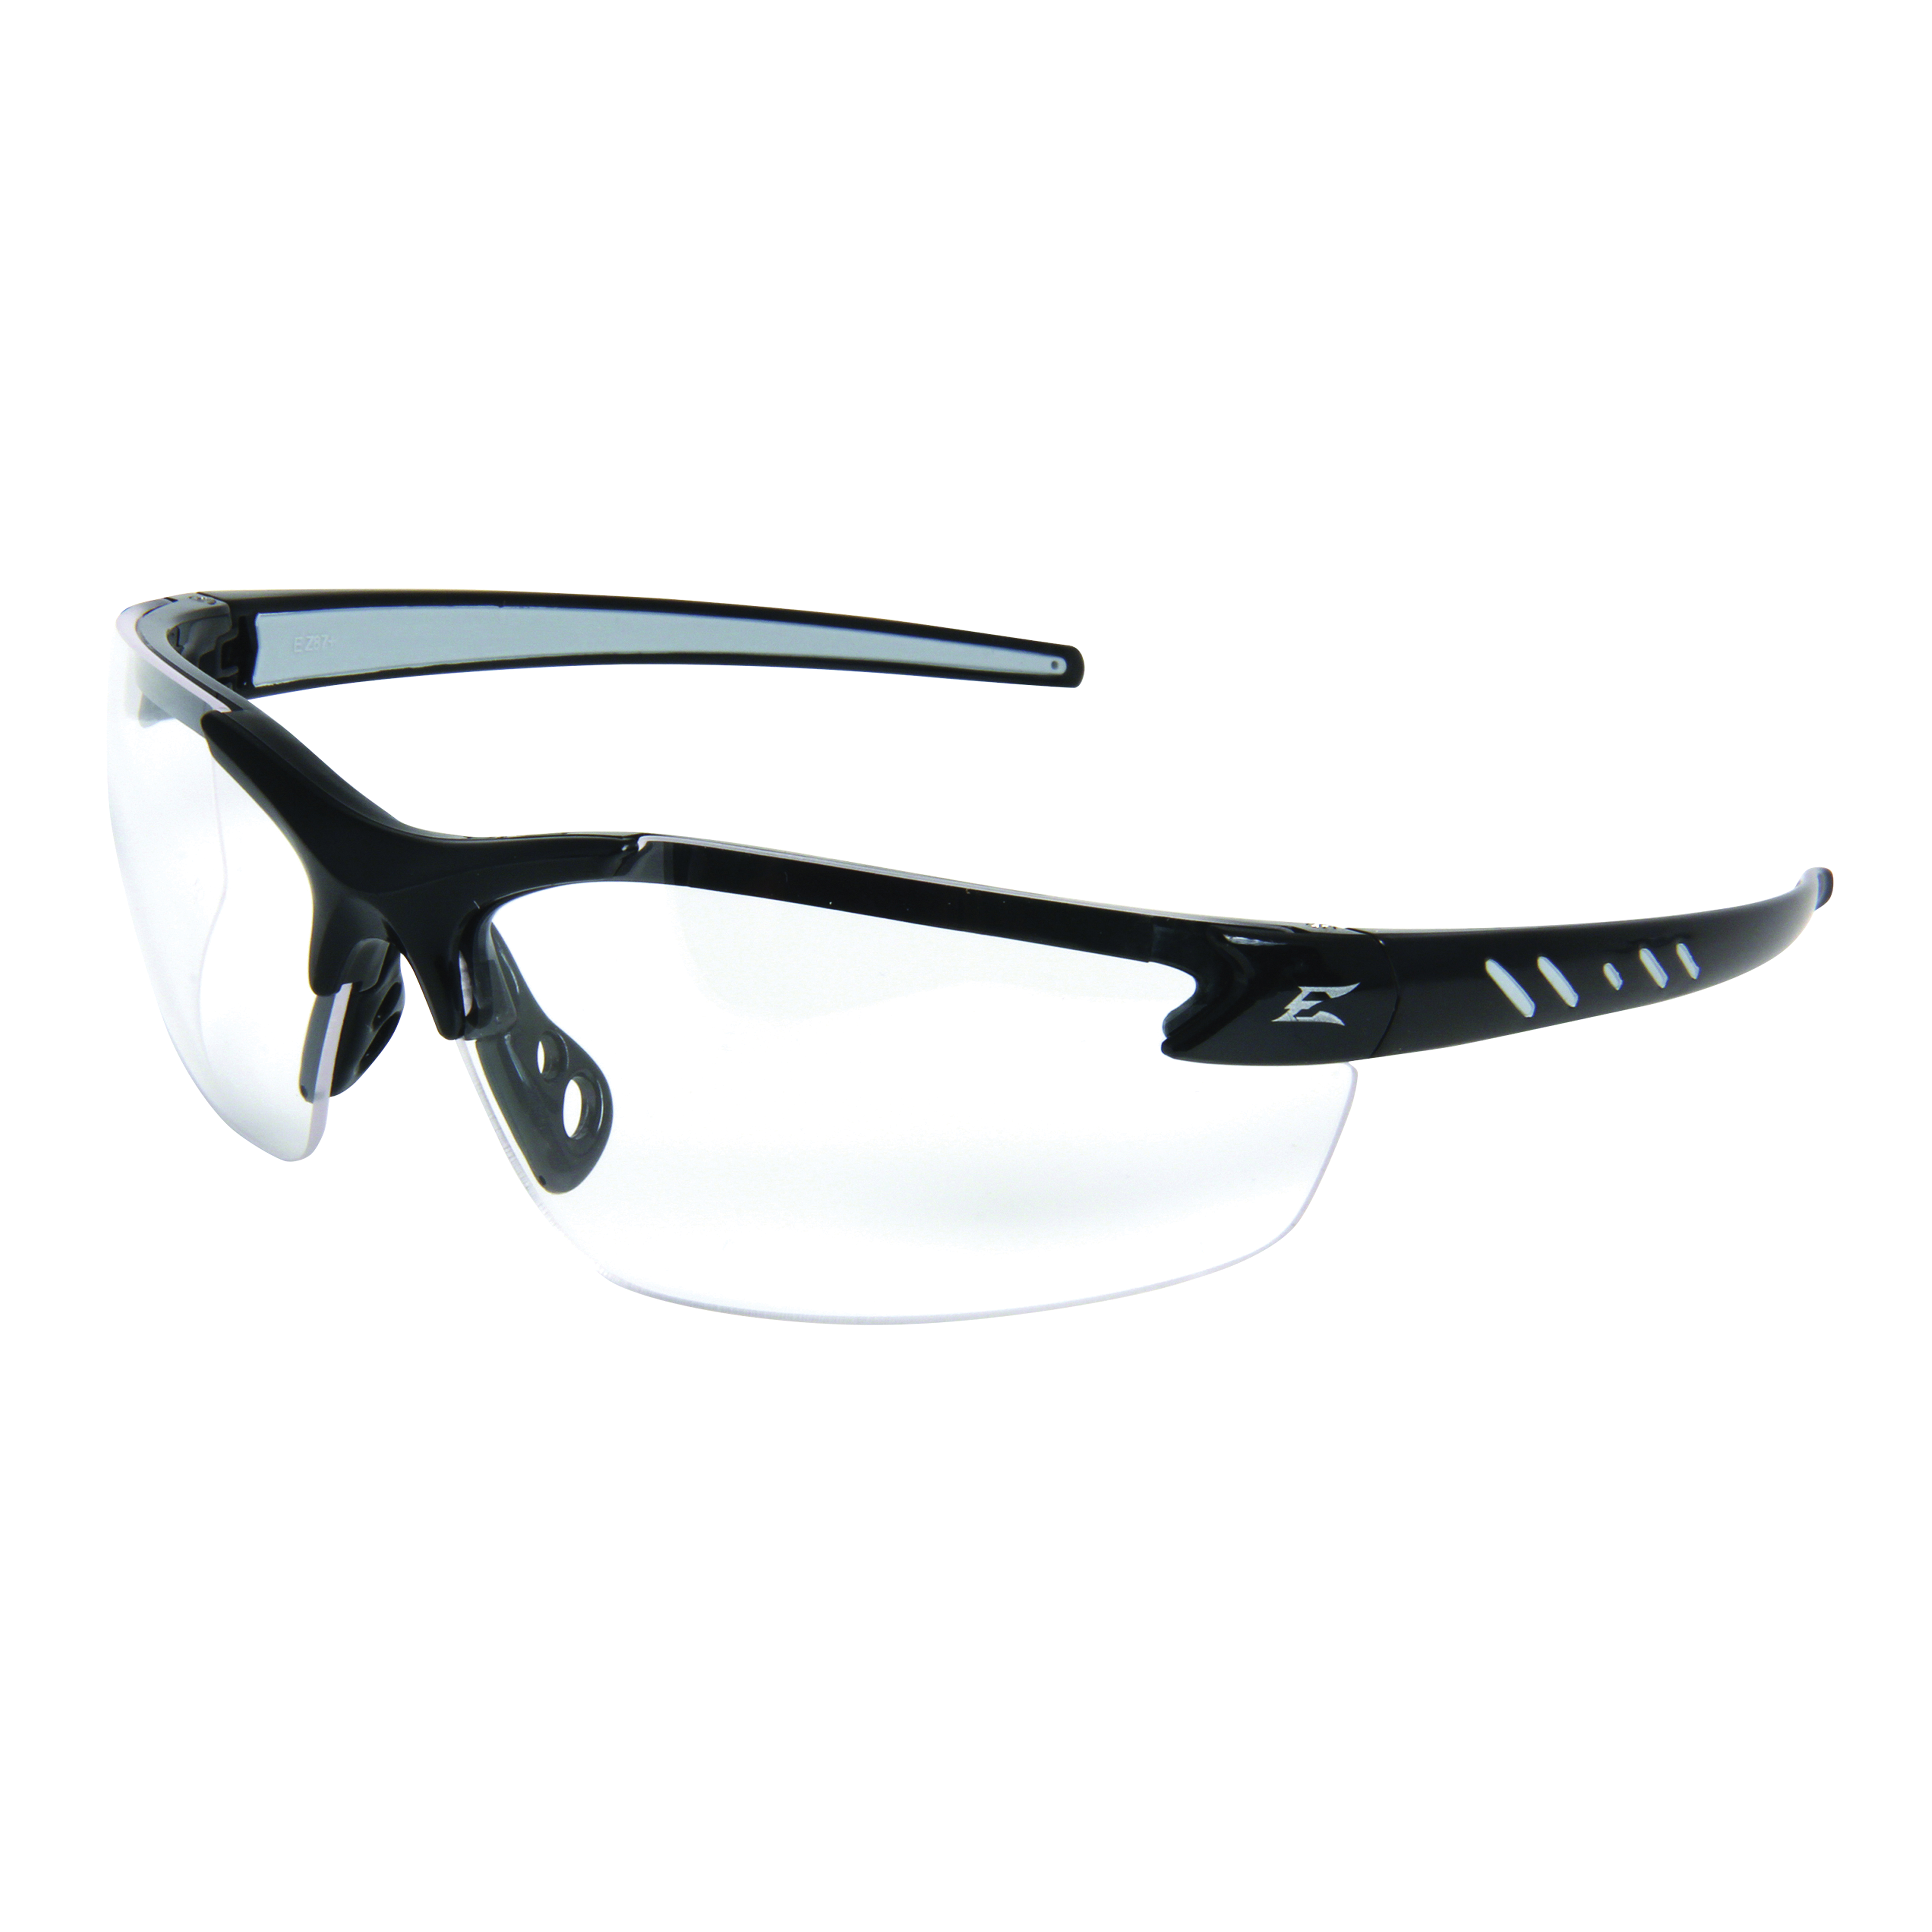 DZ111-1.5-G2 Magnifier Safety Glasses, Polycarbonate Lens, Half Wraparound Frame, Nylon Frame